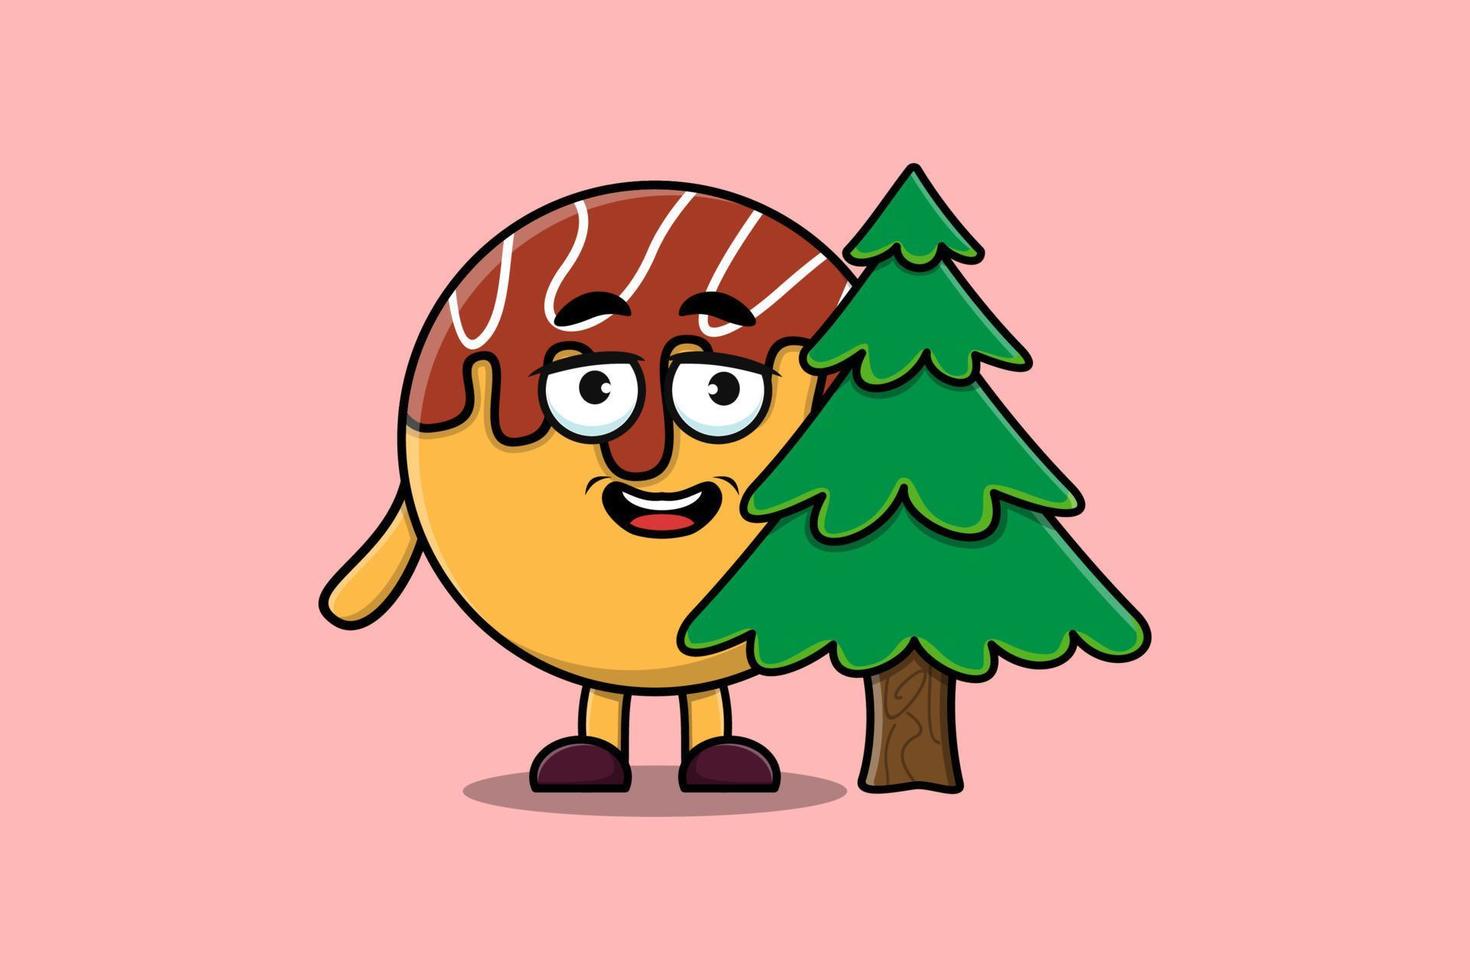 personnage takoyaki de dessin animé mignon cachant un arbre vecteur